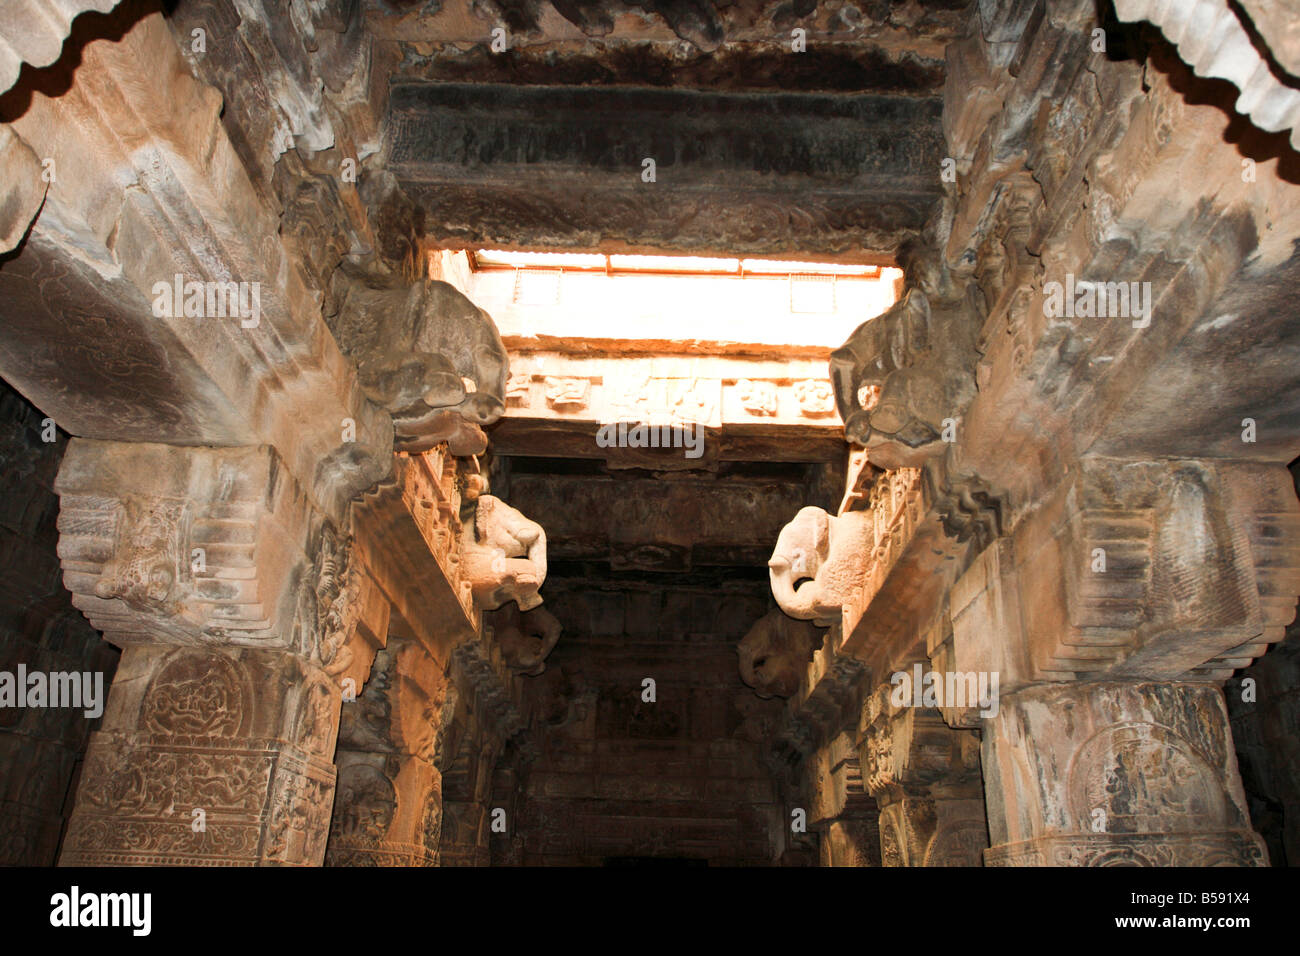 Decorations at the pillars and ceiling of a hindu temple dedicated to Shiva at the ancient site of Pattadakal Karnataka India Stock Photo